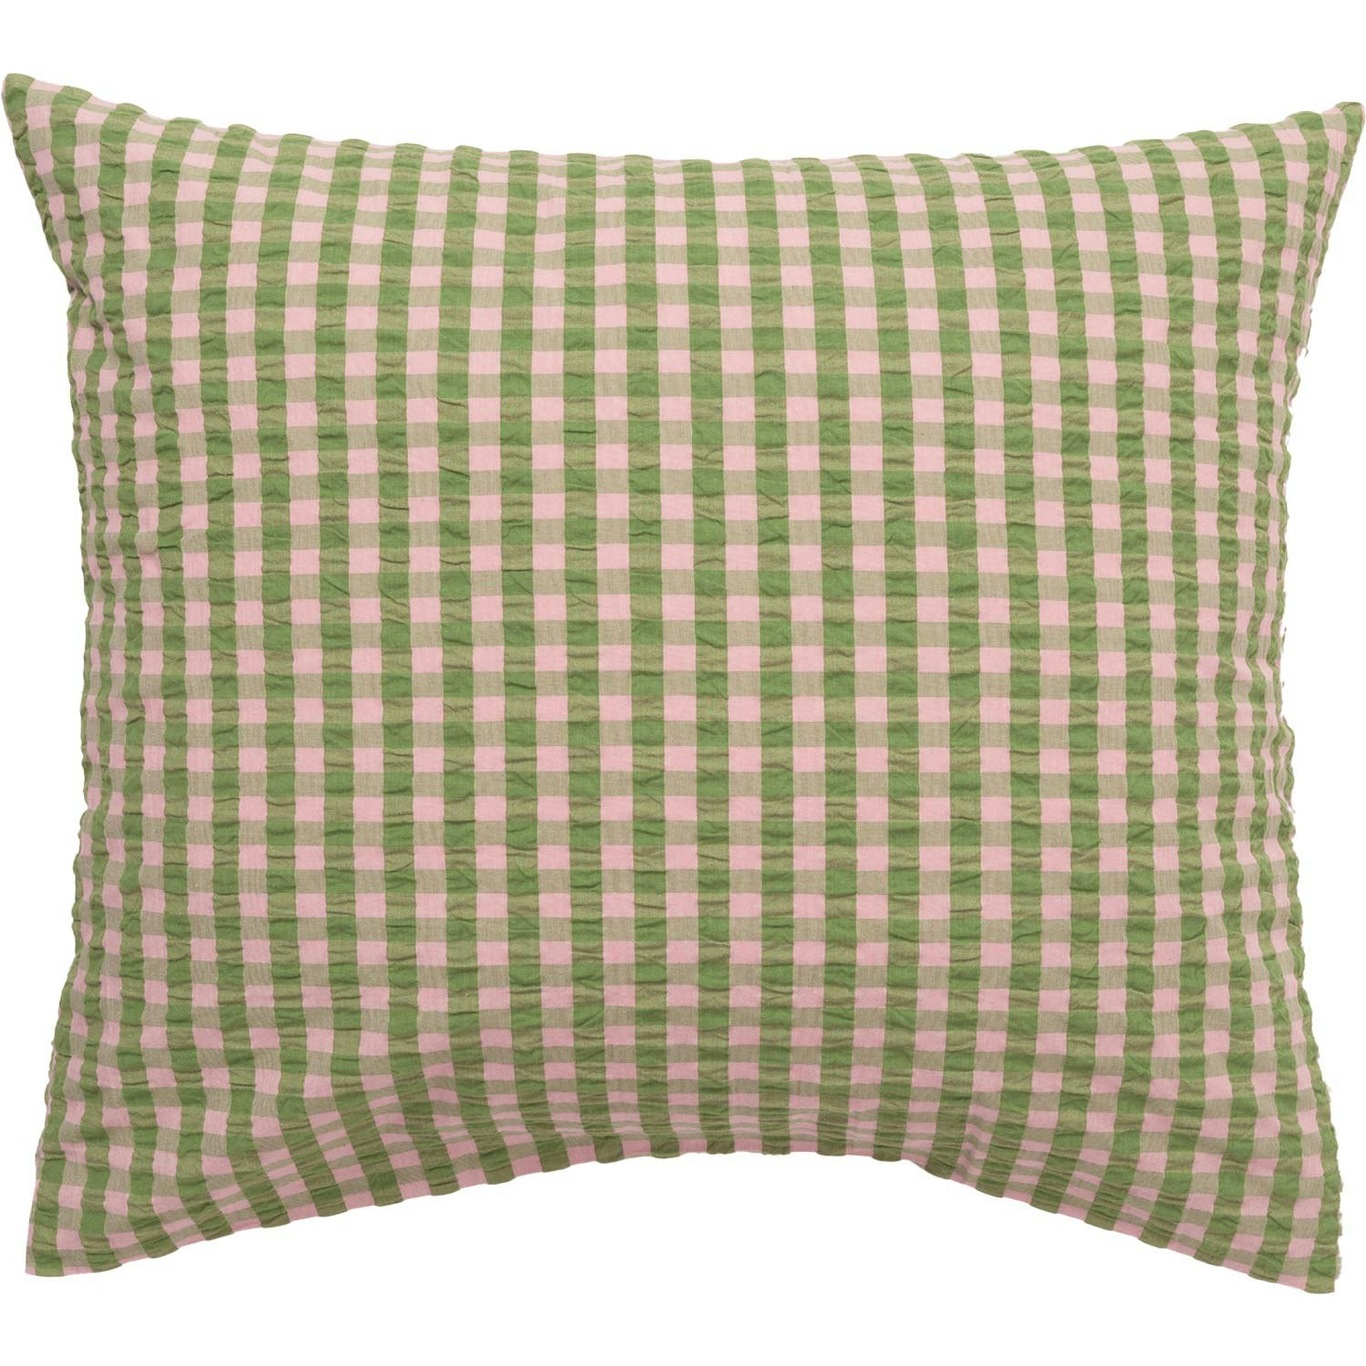 Bæk & Bølge Pillowcase 50x60 cm, Green/Pale Pink